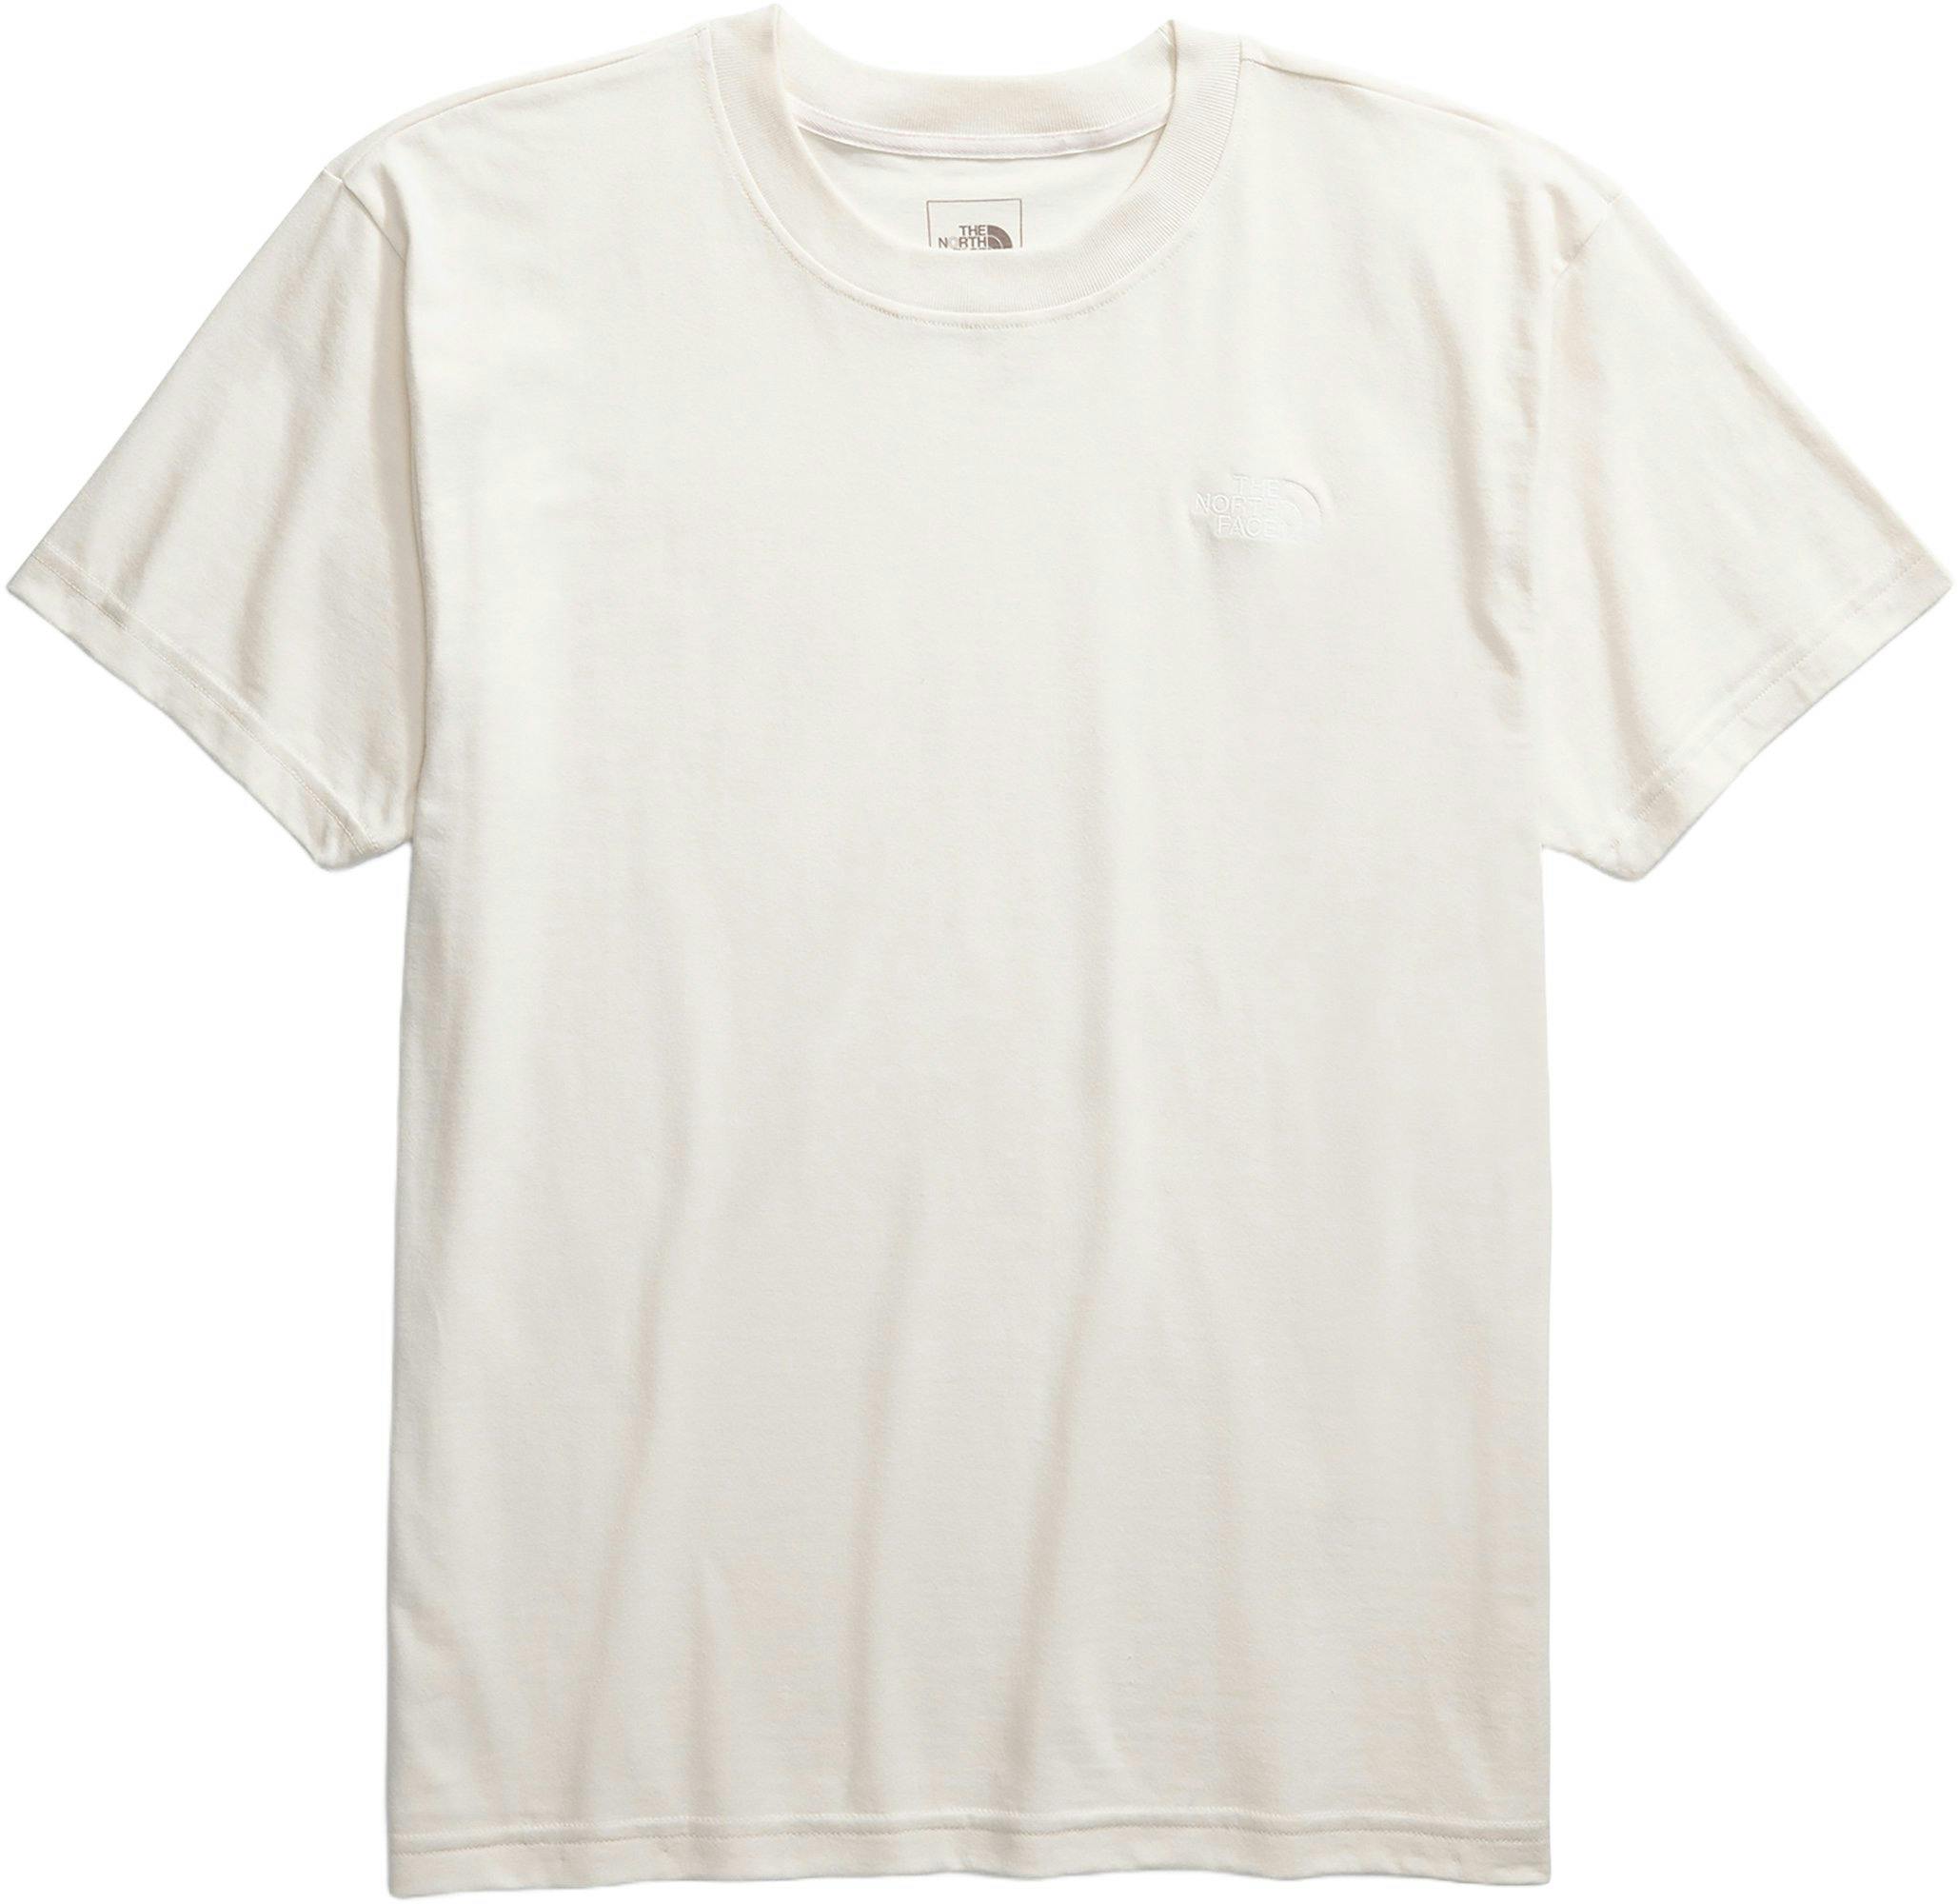 Product image for Short Sleeve Evolution Box Fit T-shirt - Men's